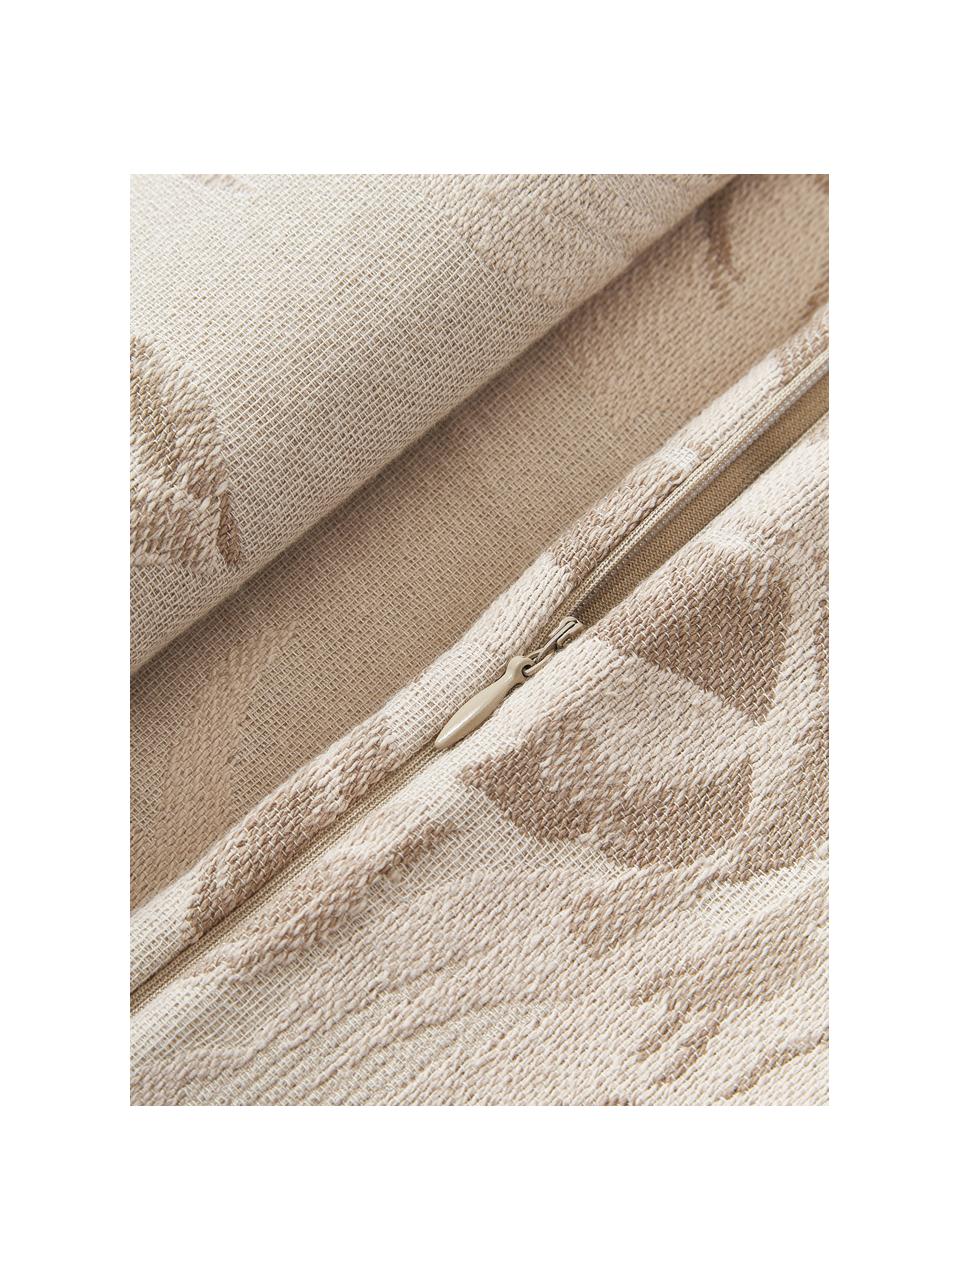 Baumwoll-Kissenhülle Breight mit gewebtem Jacquard-Muster, 100 % Baumwolle, Hellbeige, Braun, B 50 x L 50 cm